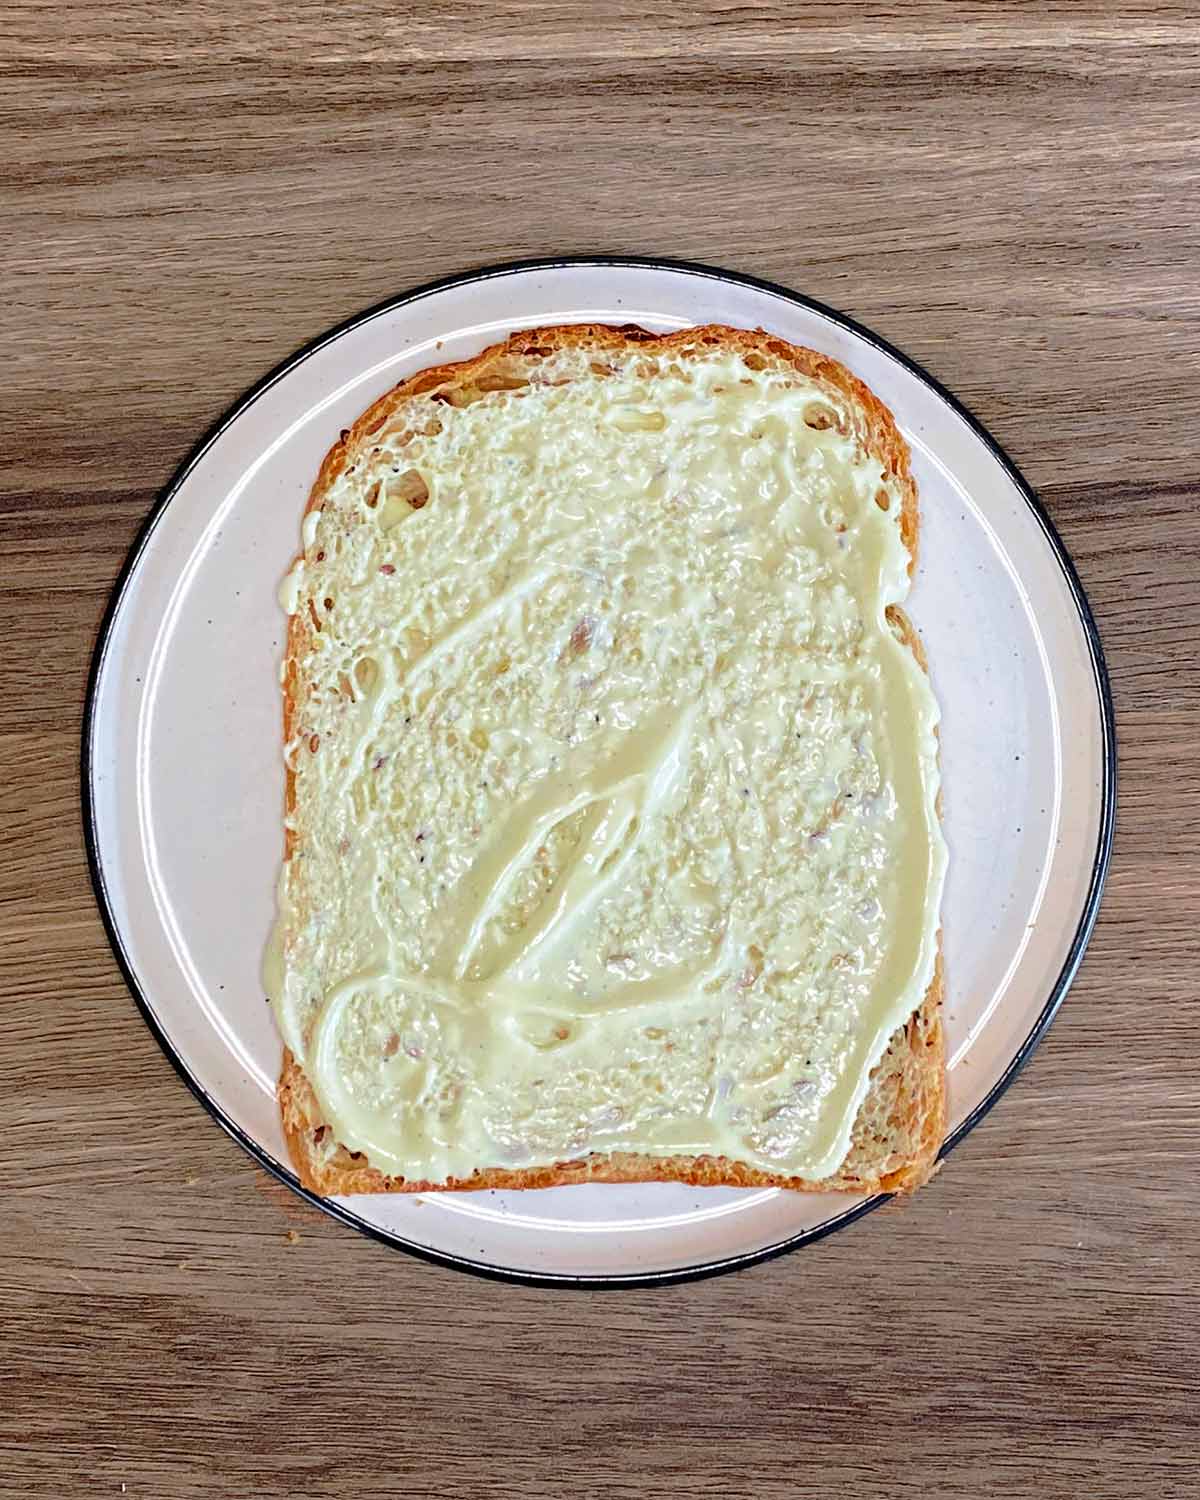 Mustard mayo spread over a slice of bread.